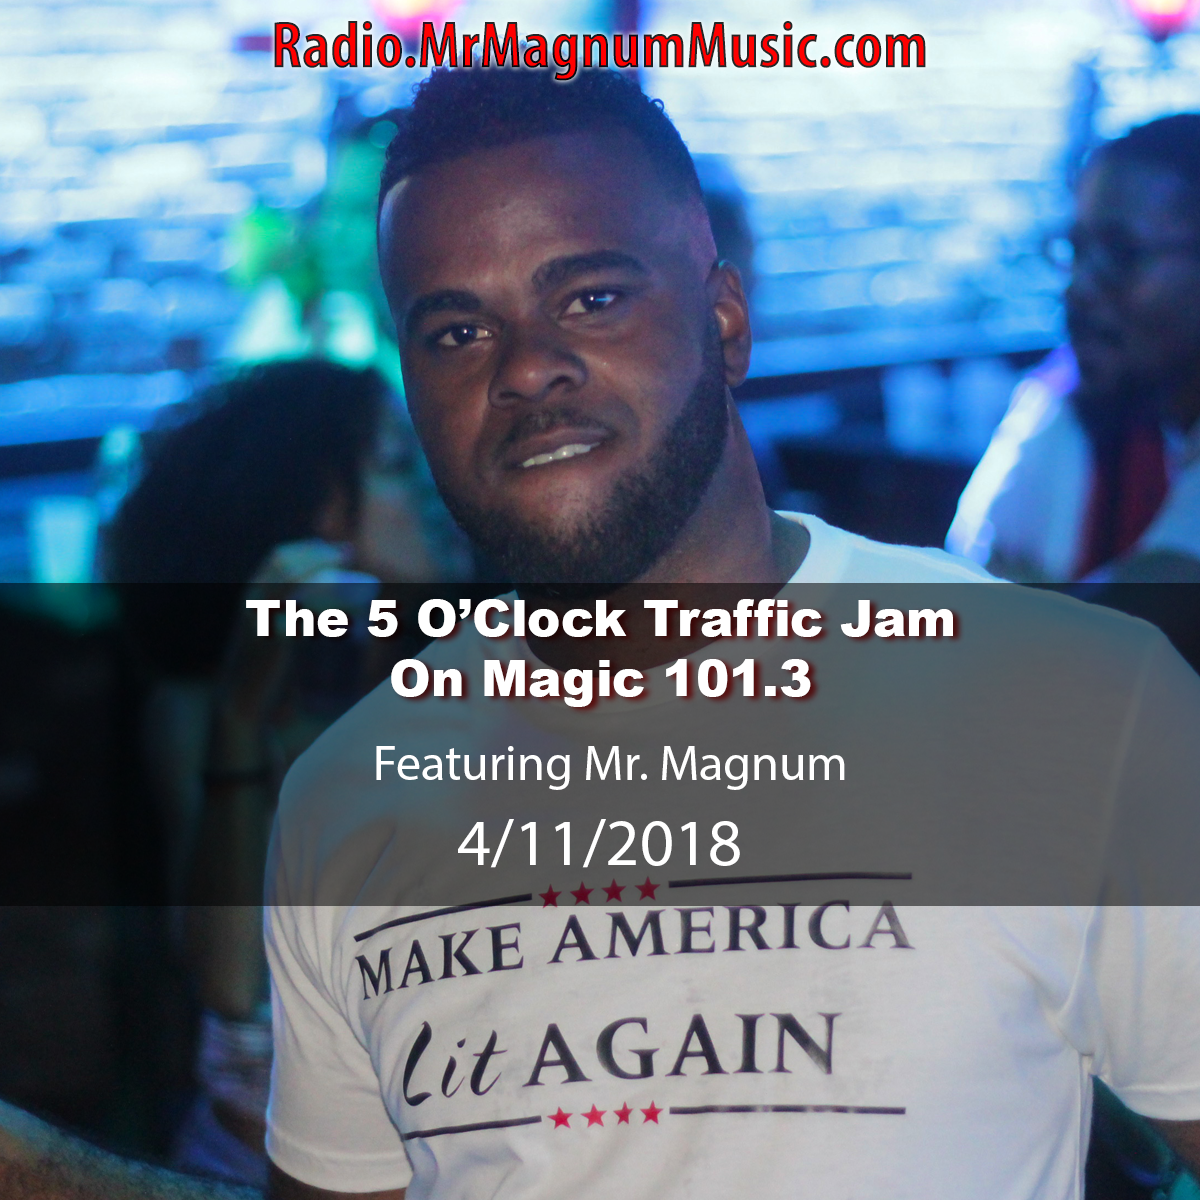 The 5 O'Clock Traffic Jam 20180411 featuring Gainesville's #1 DJ, Mr. Magnum on Magic 101.3